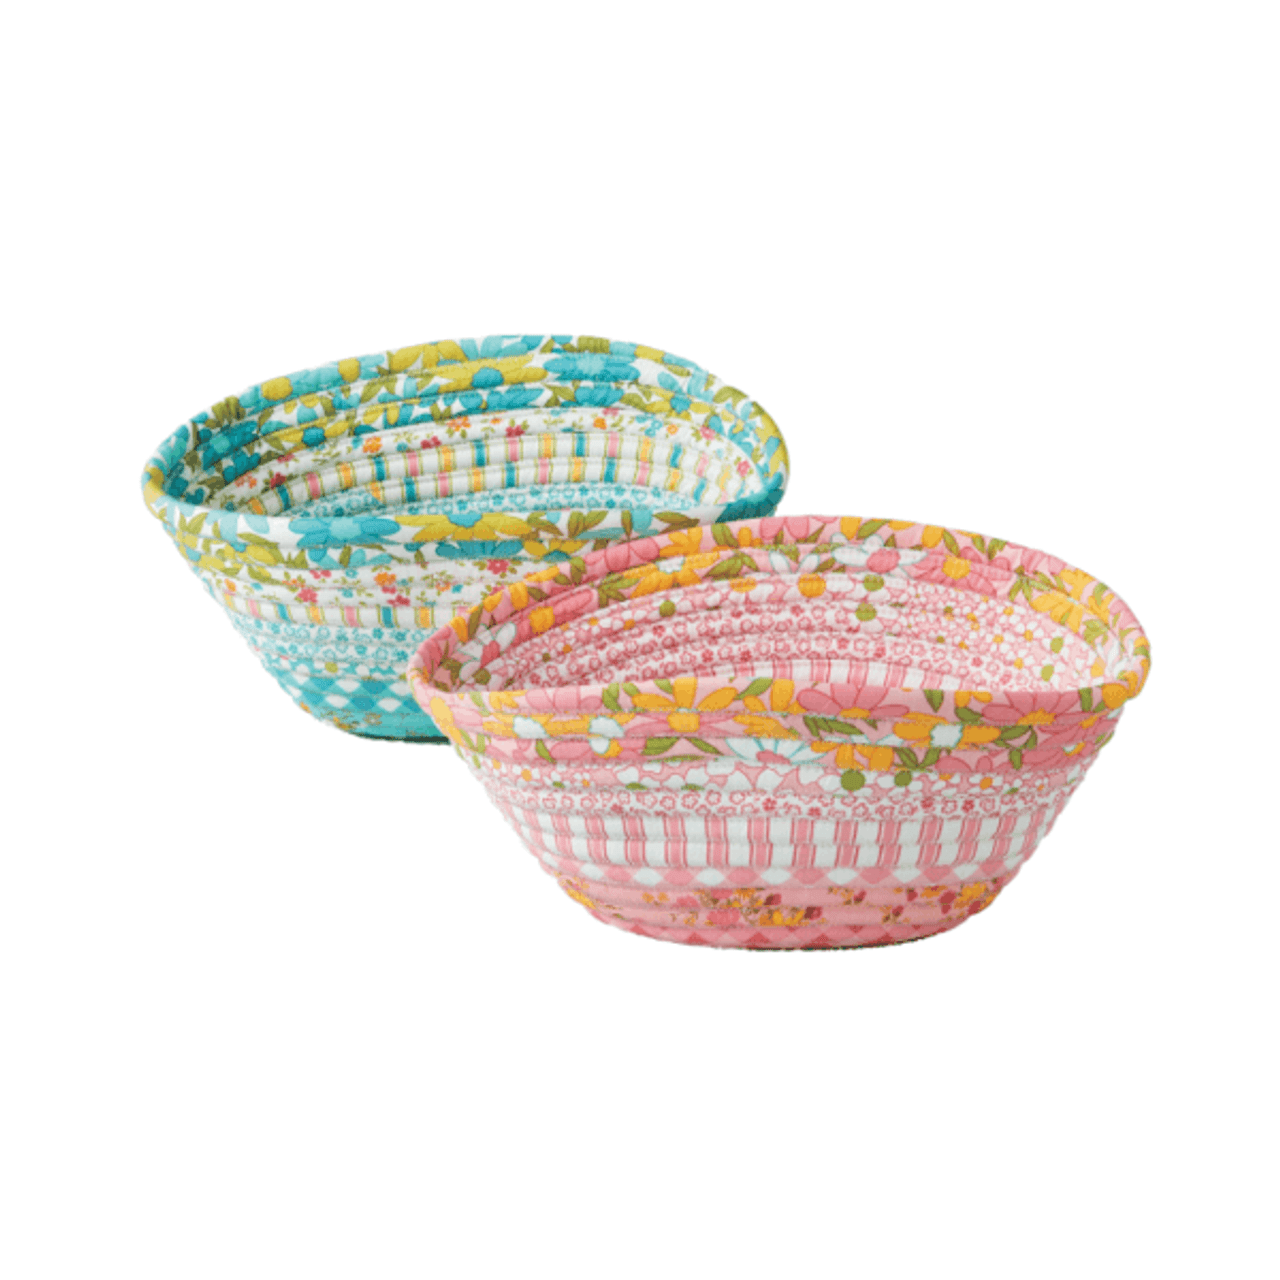 Fabric Tube bowls & Baskets